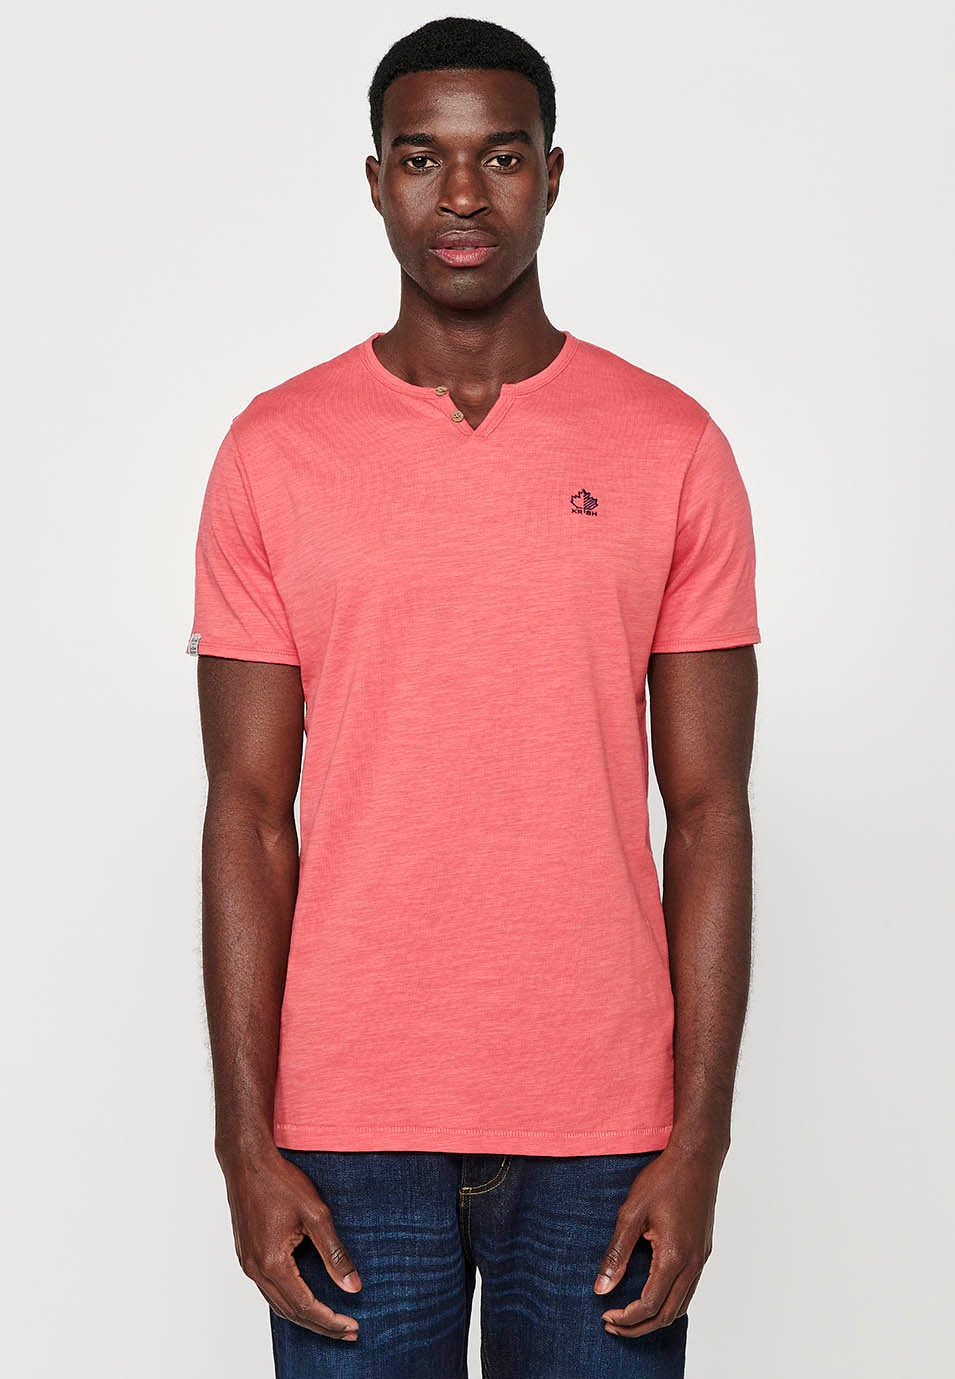 Camiseta básica de manga corta de algodón, cuello V con boton, color rosa para hombre 6